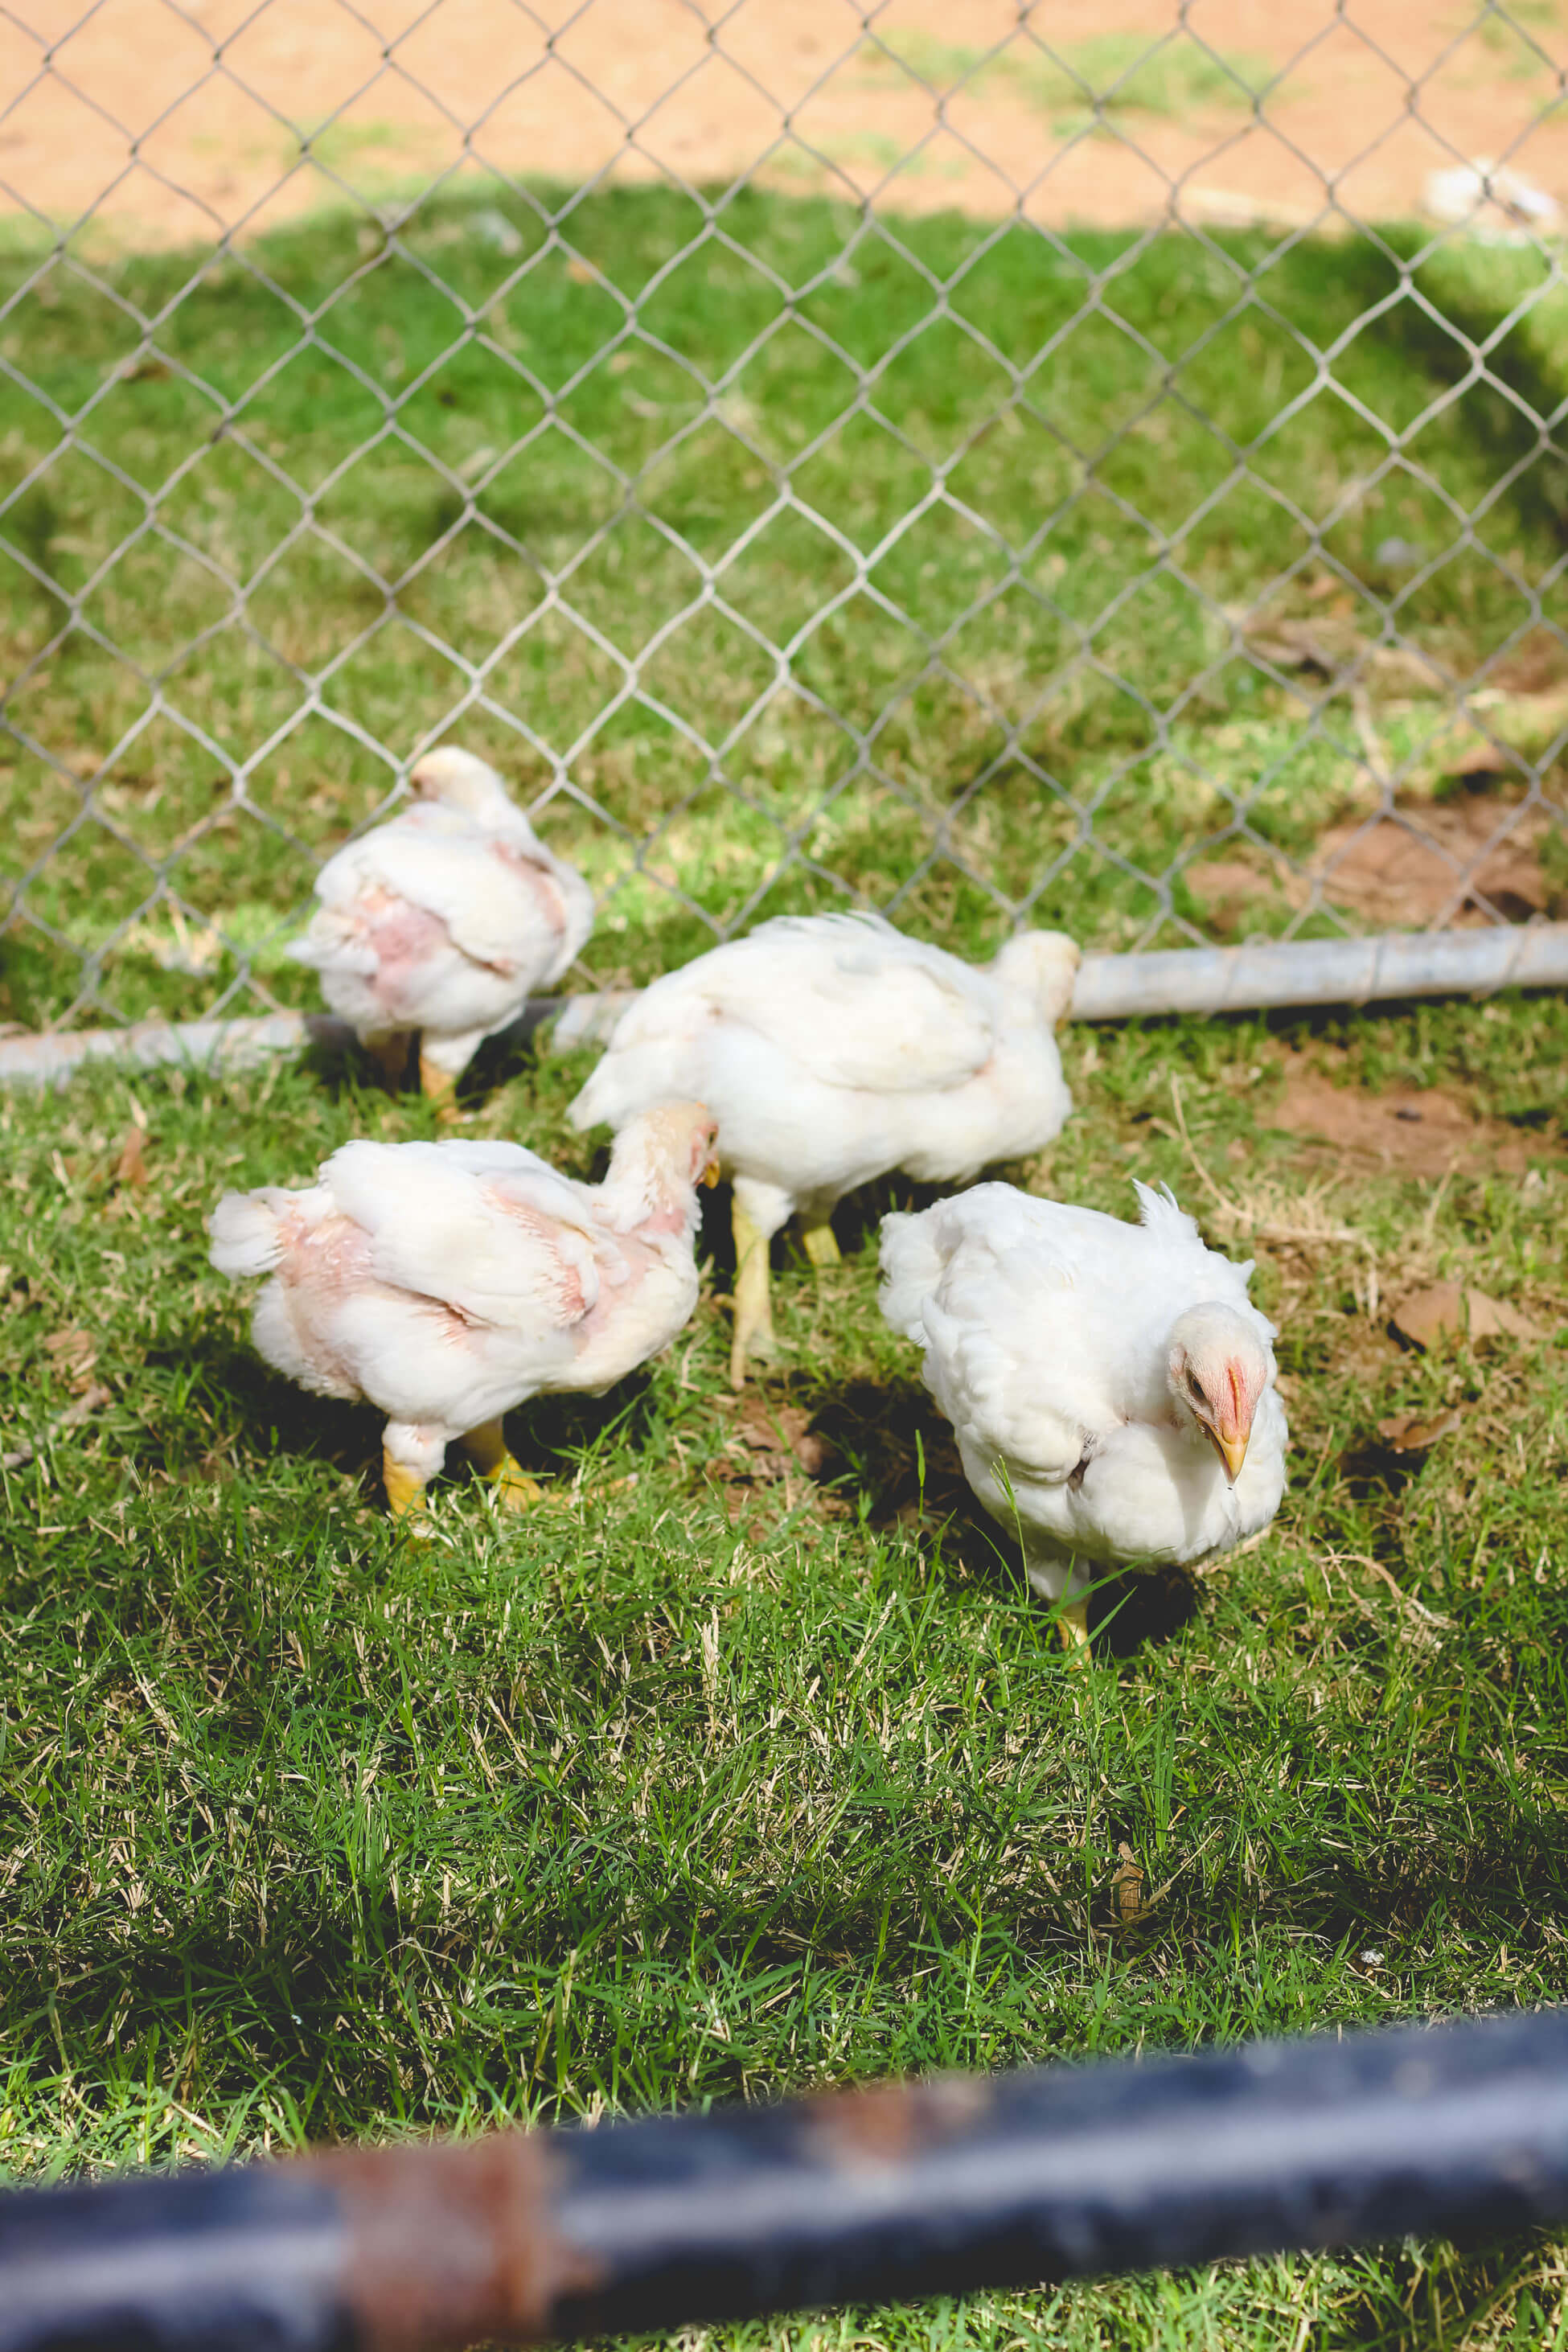 Cornish Cross meat chickens in yard